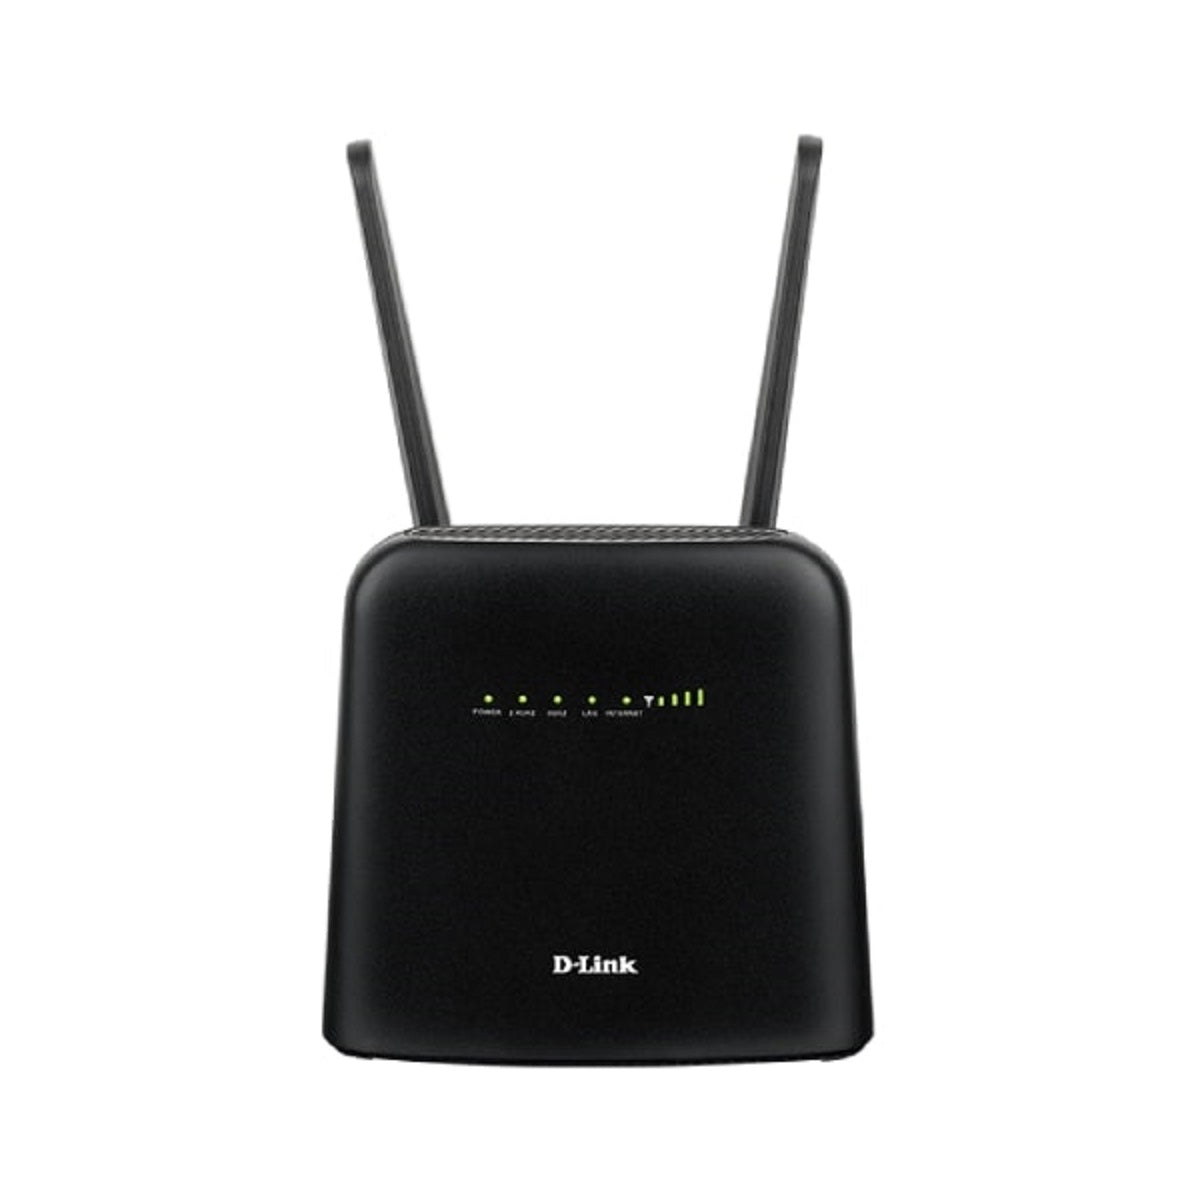 D-Link DWR-960 WiFi 5 3G/4G LTE Cat 7 Router